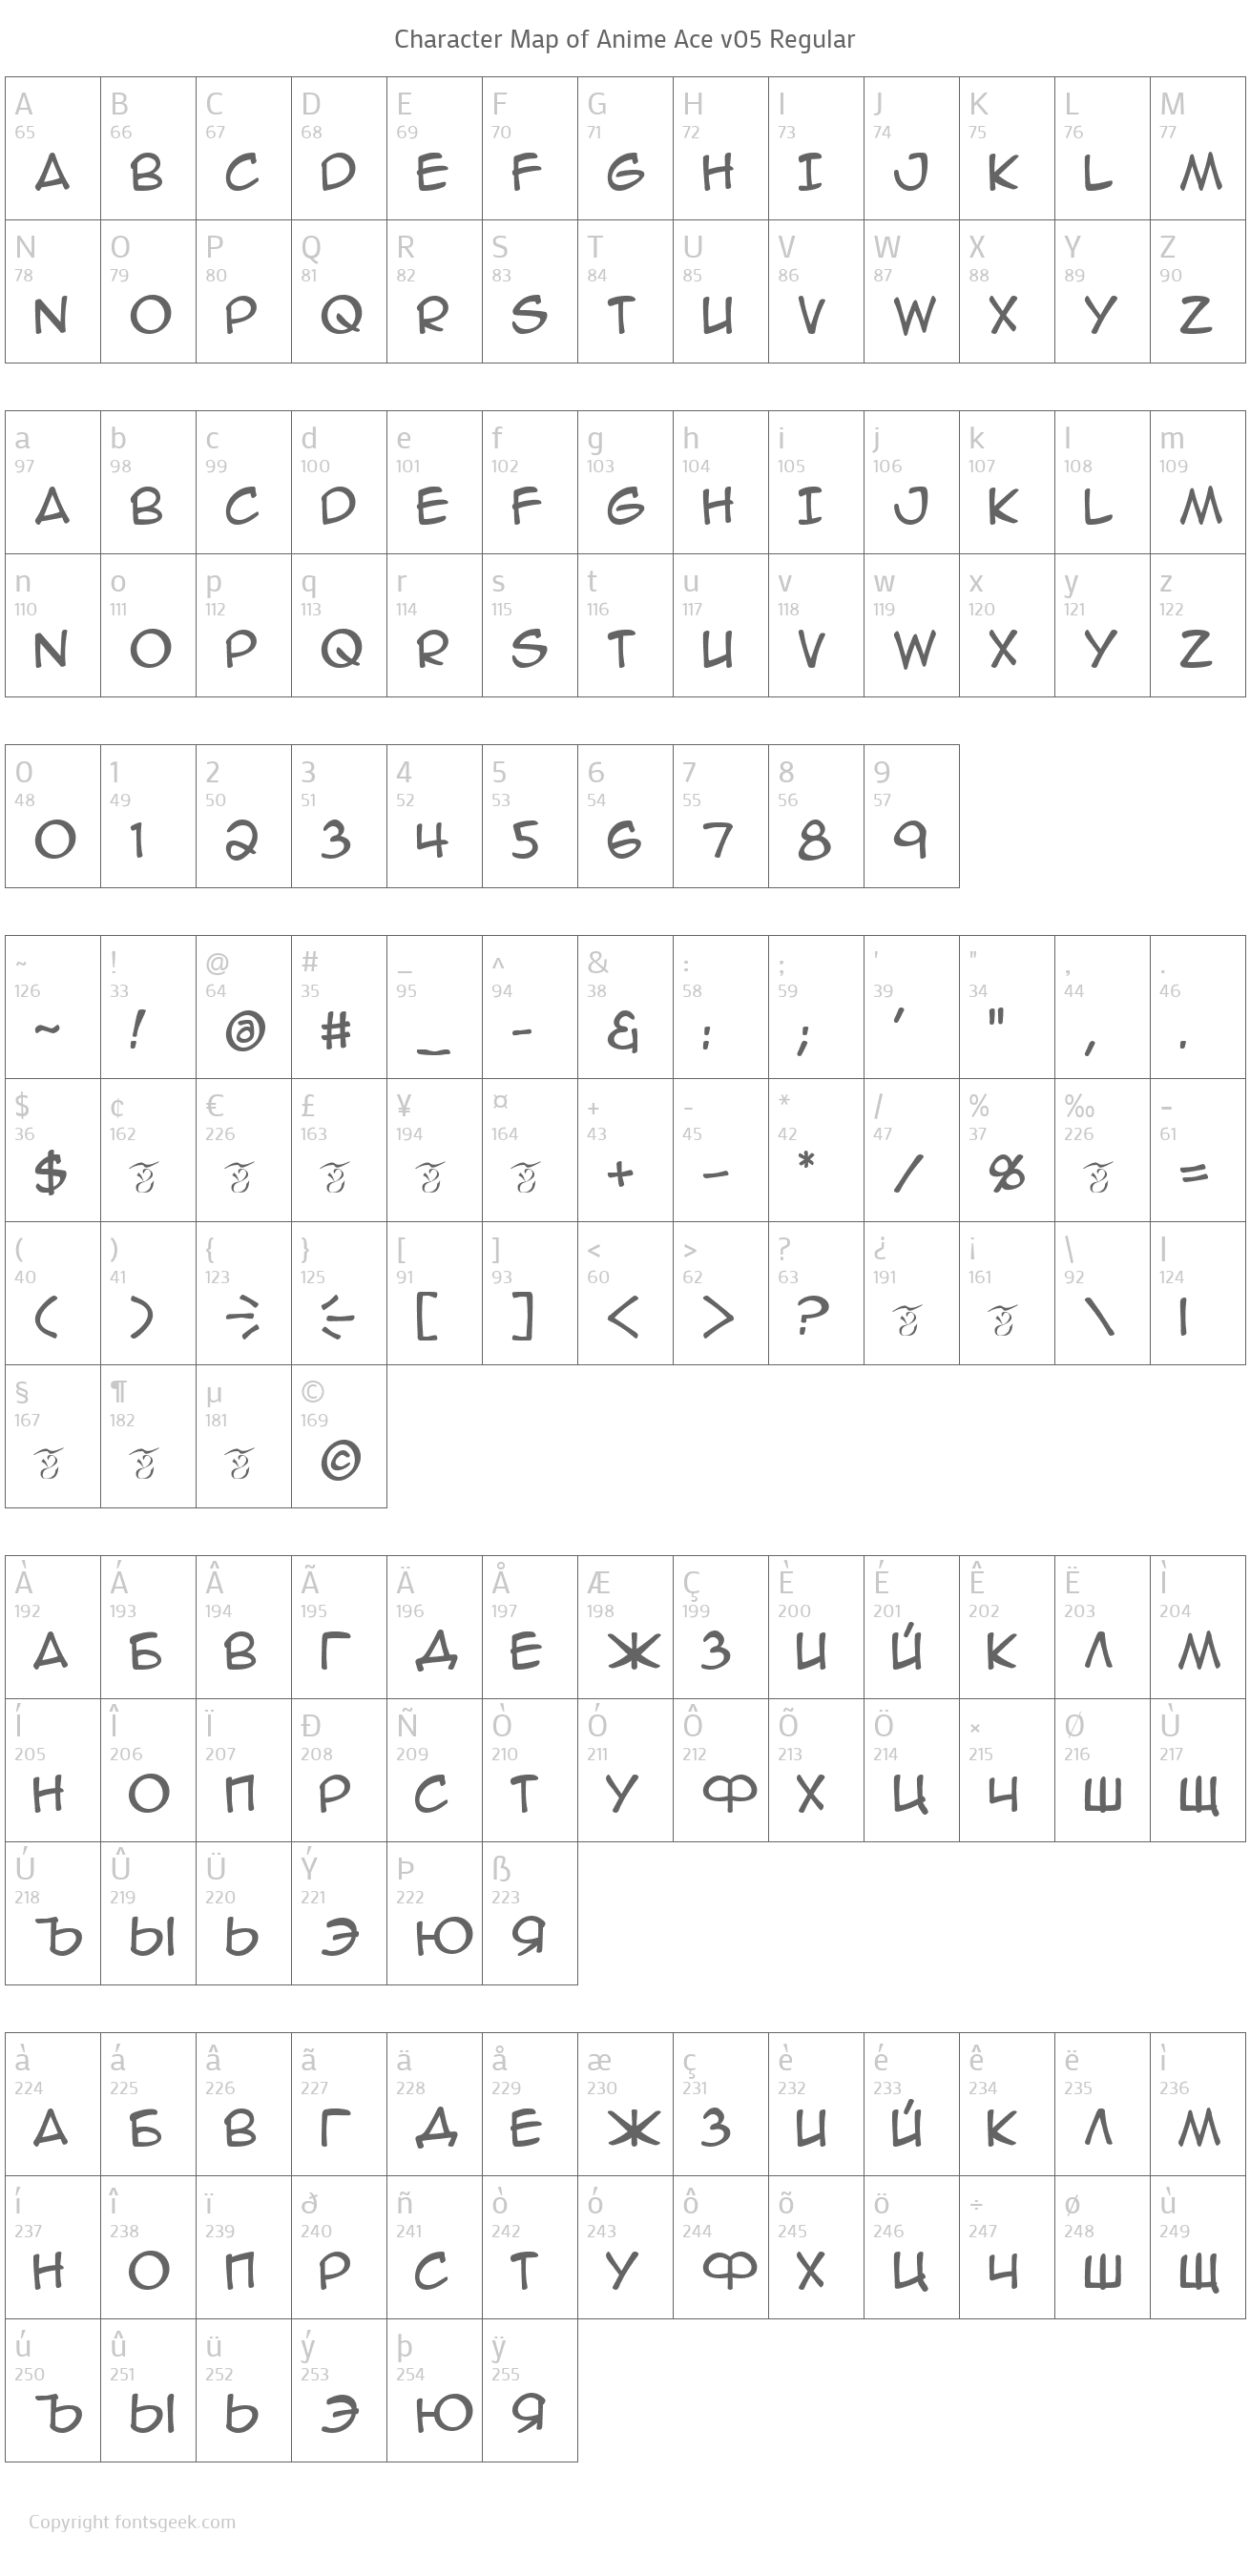 Ref Sheet Name Fonts by Neffertity on DeviantArt